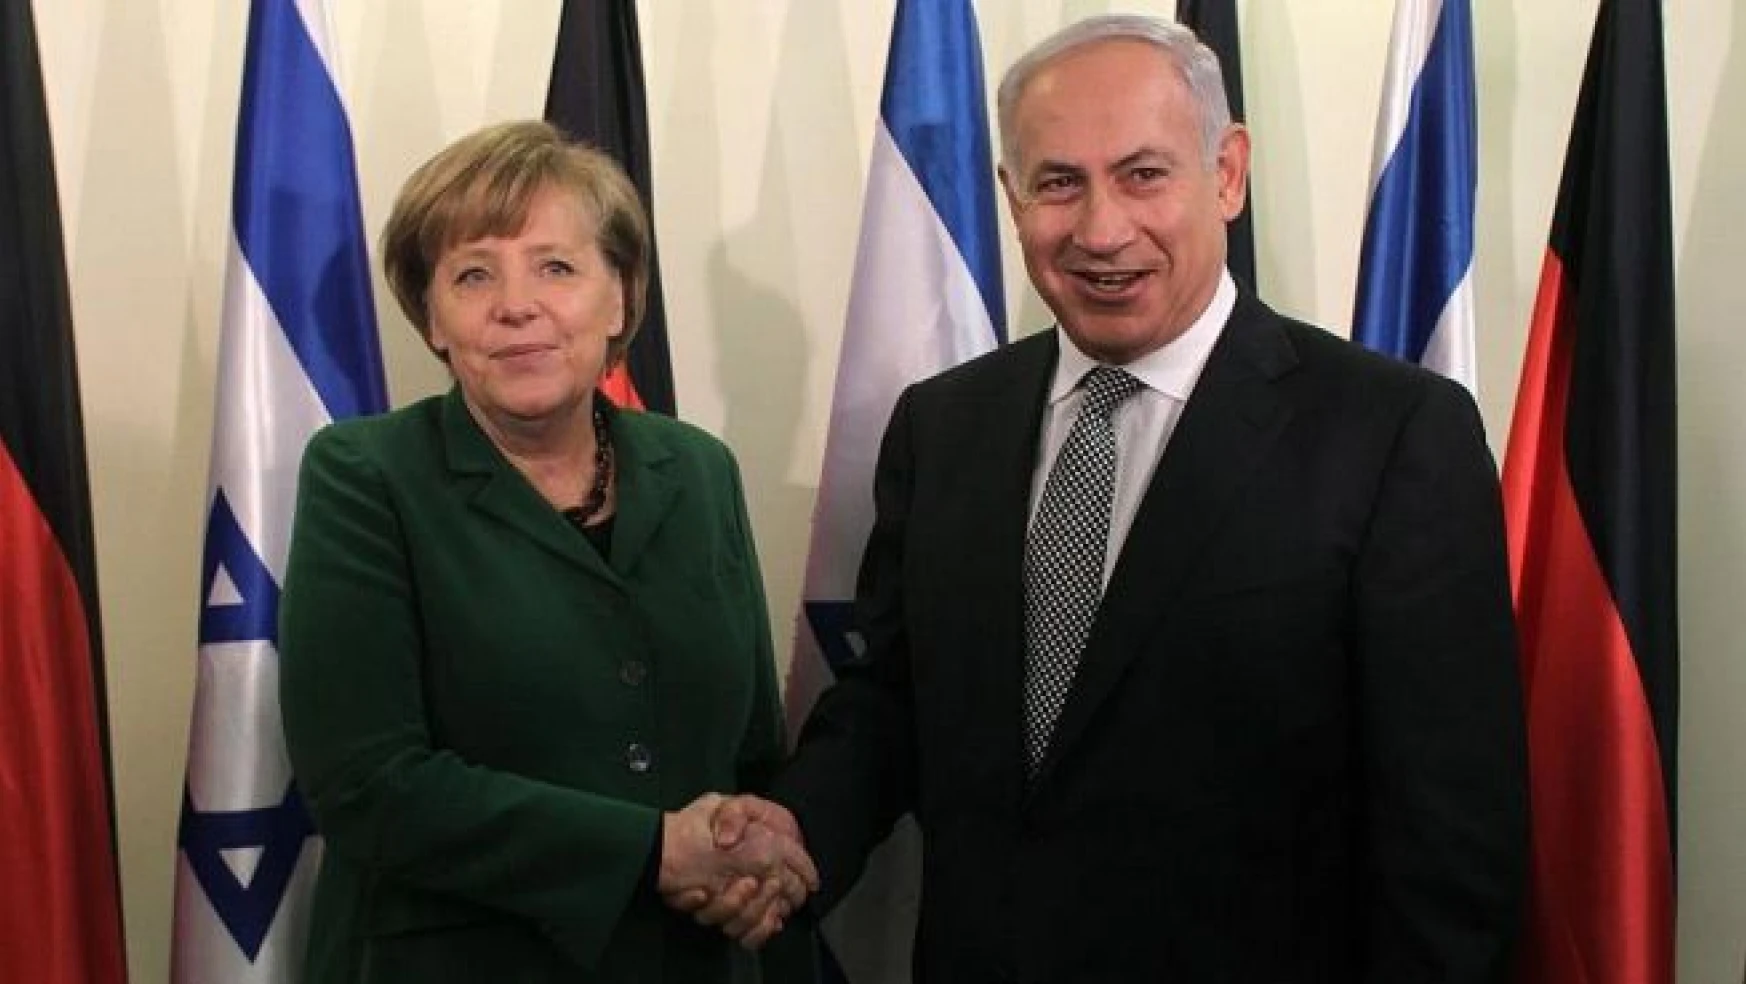 Netanyahu Merkel'den yardım talep etmiş